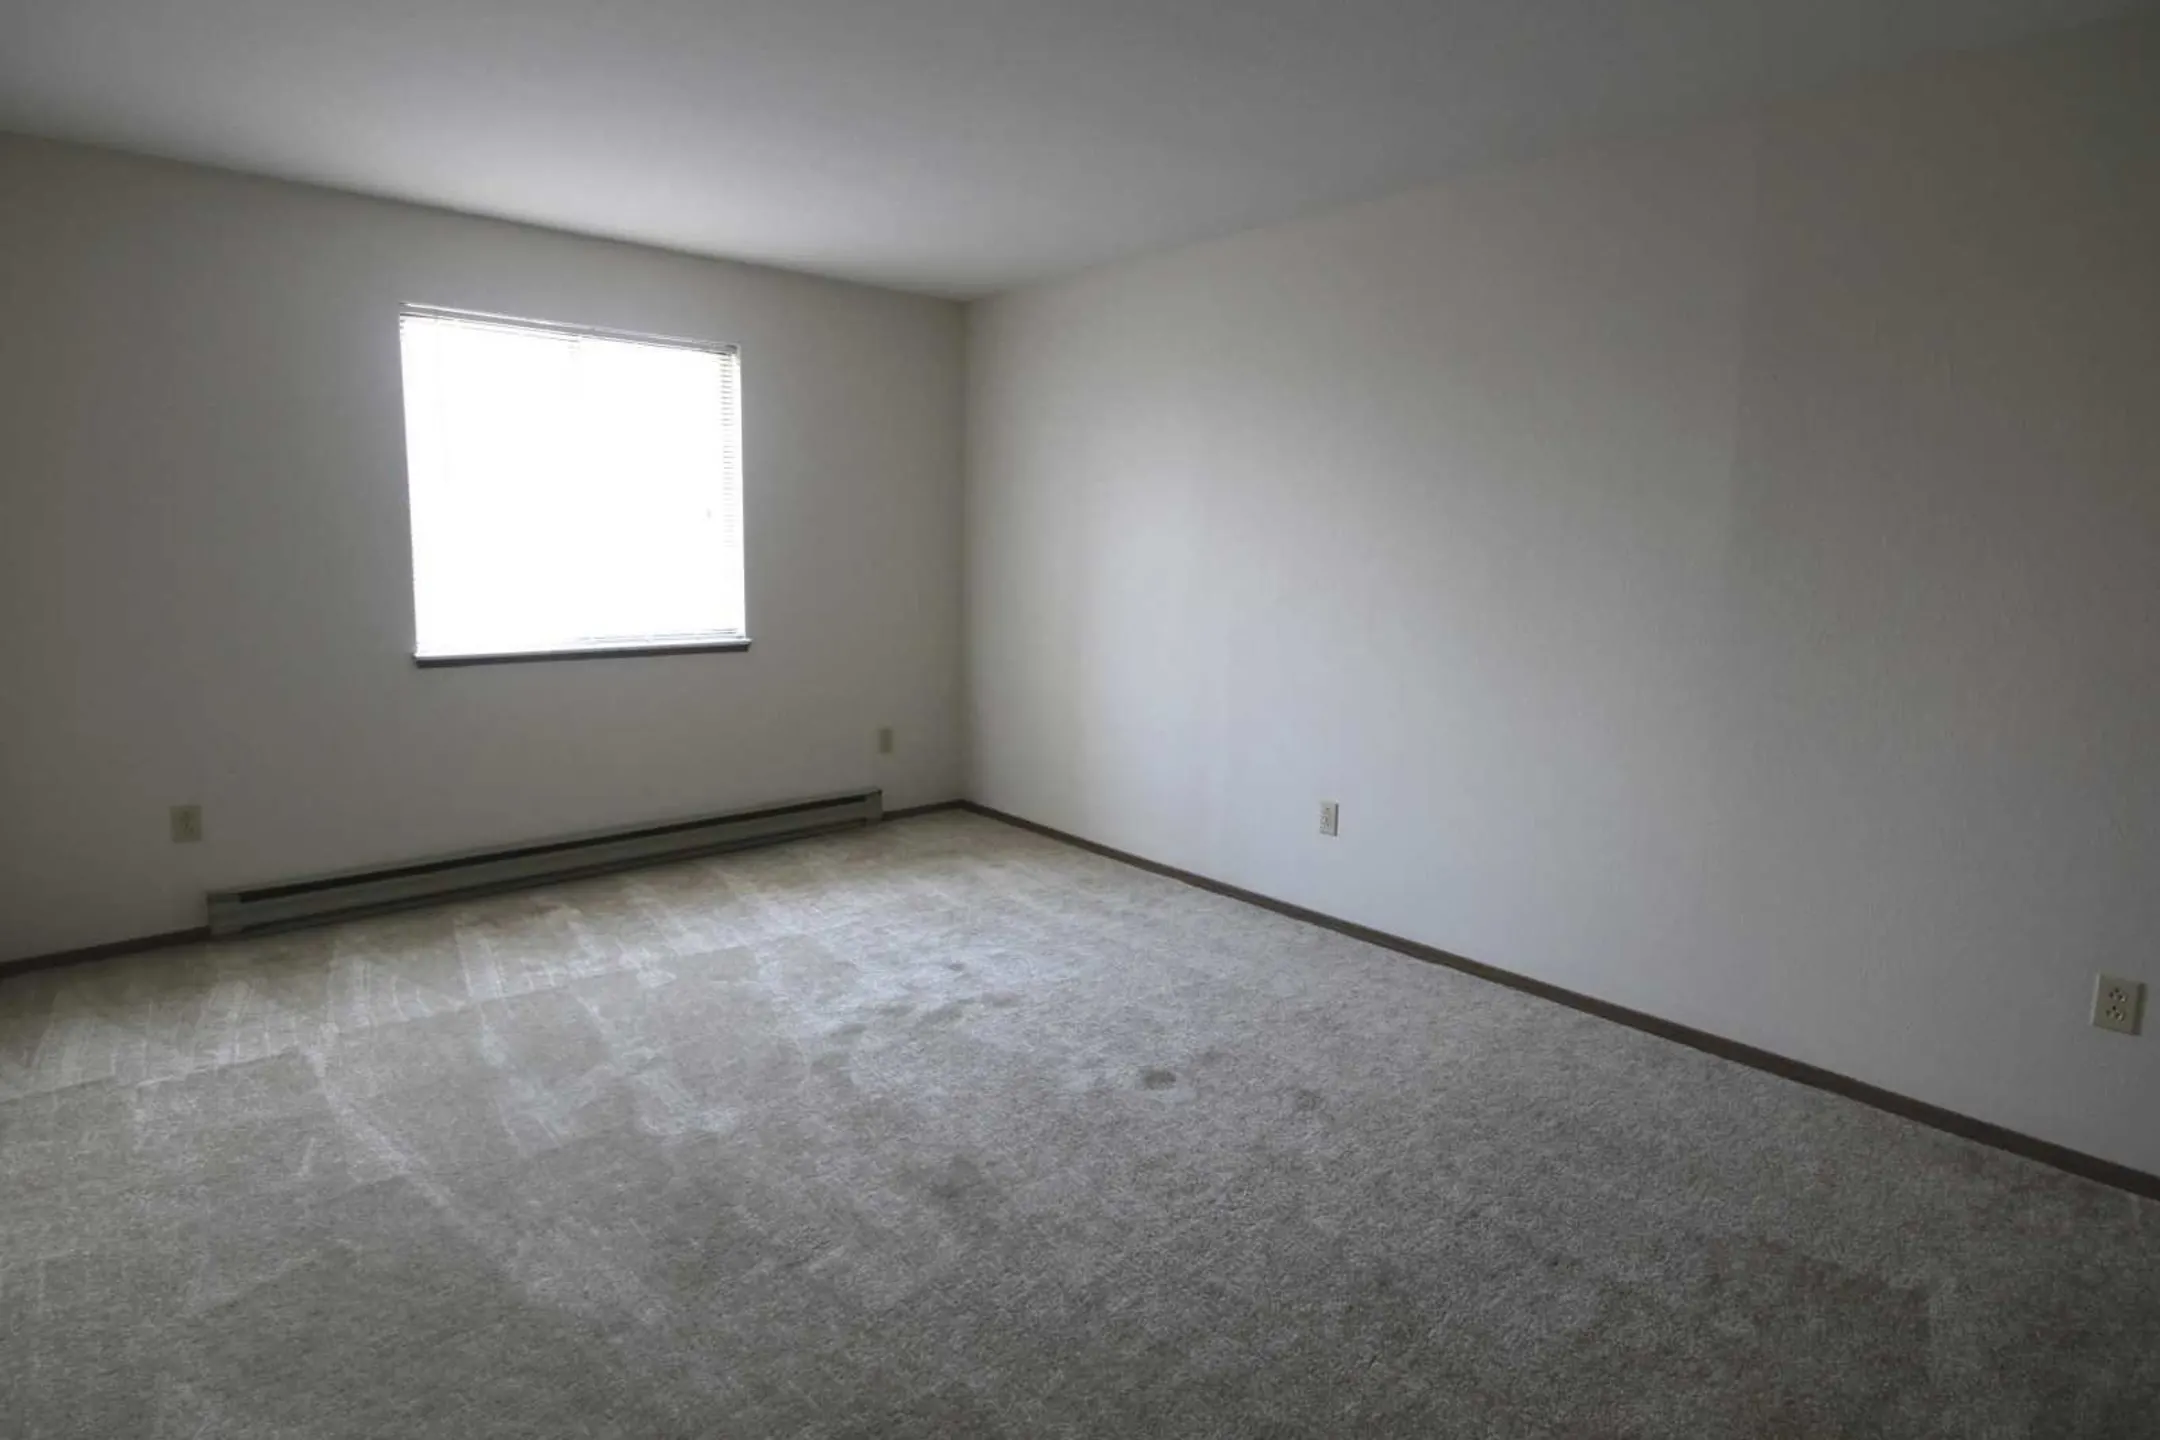 Bedroom - Heathbriar Apartments - Toledo, OH